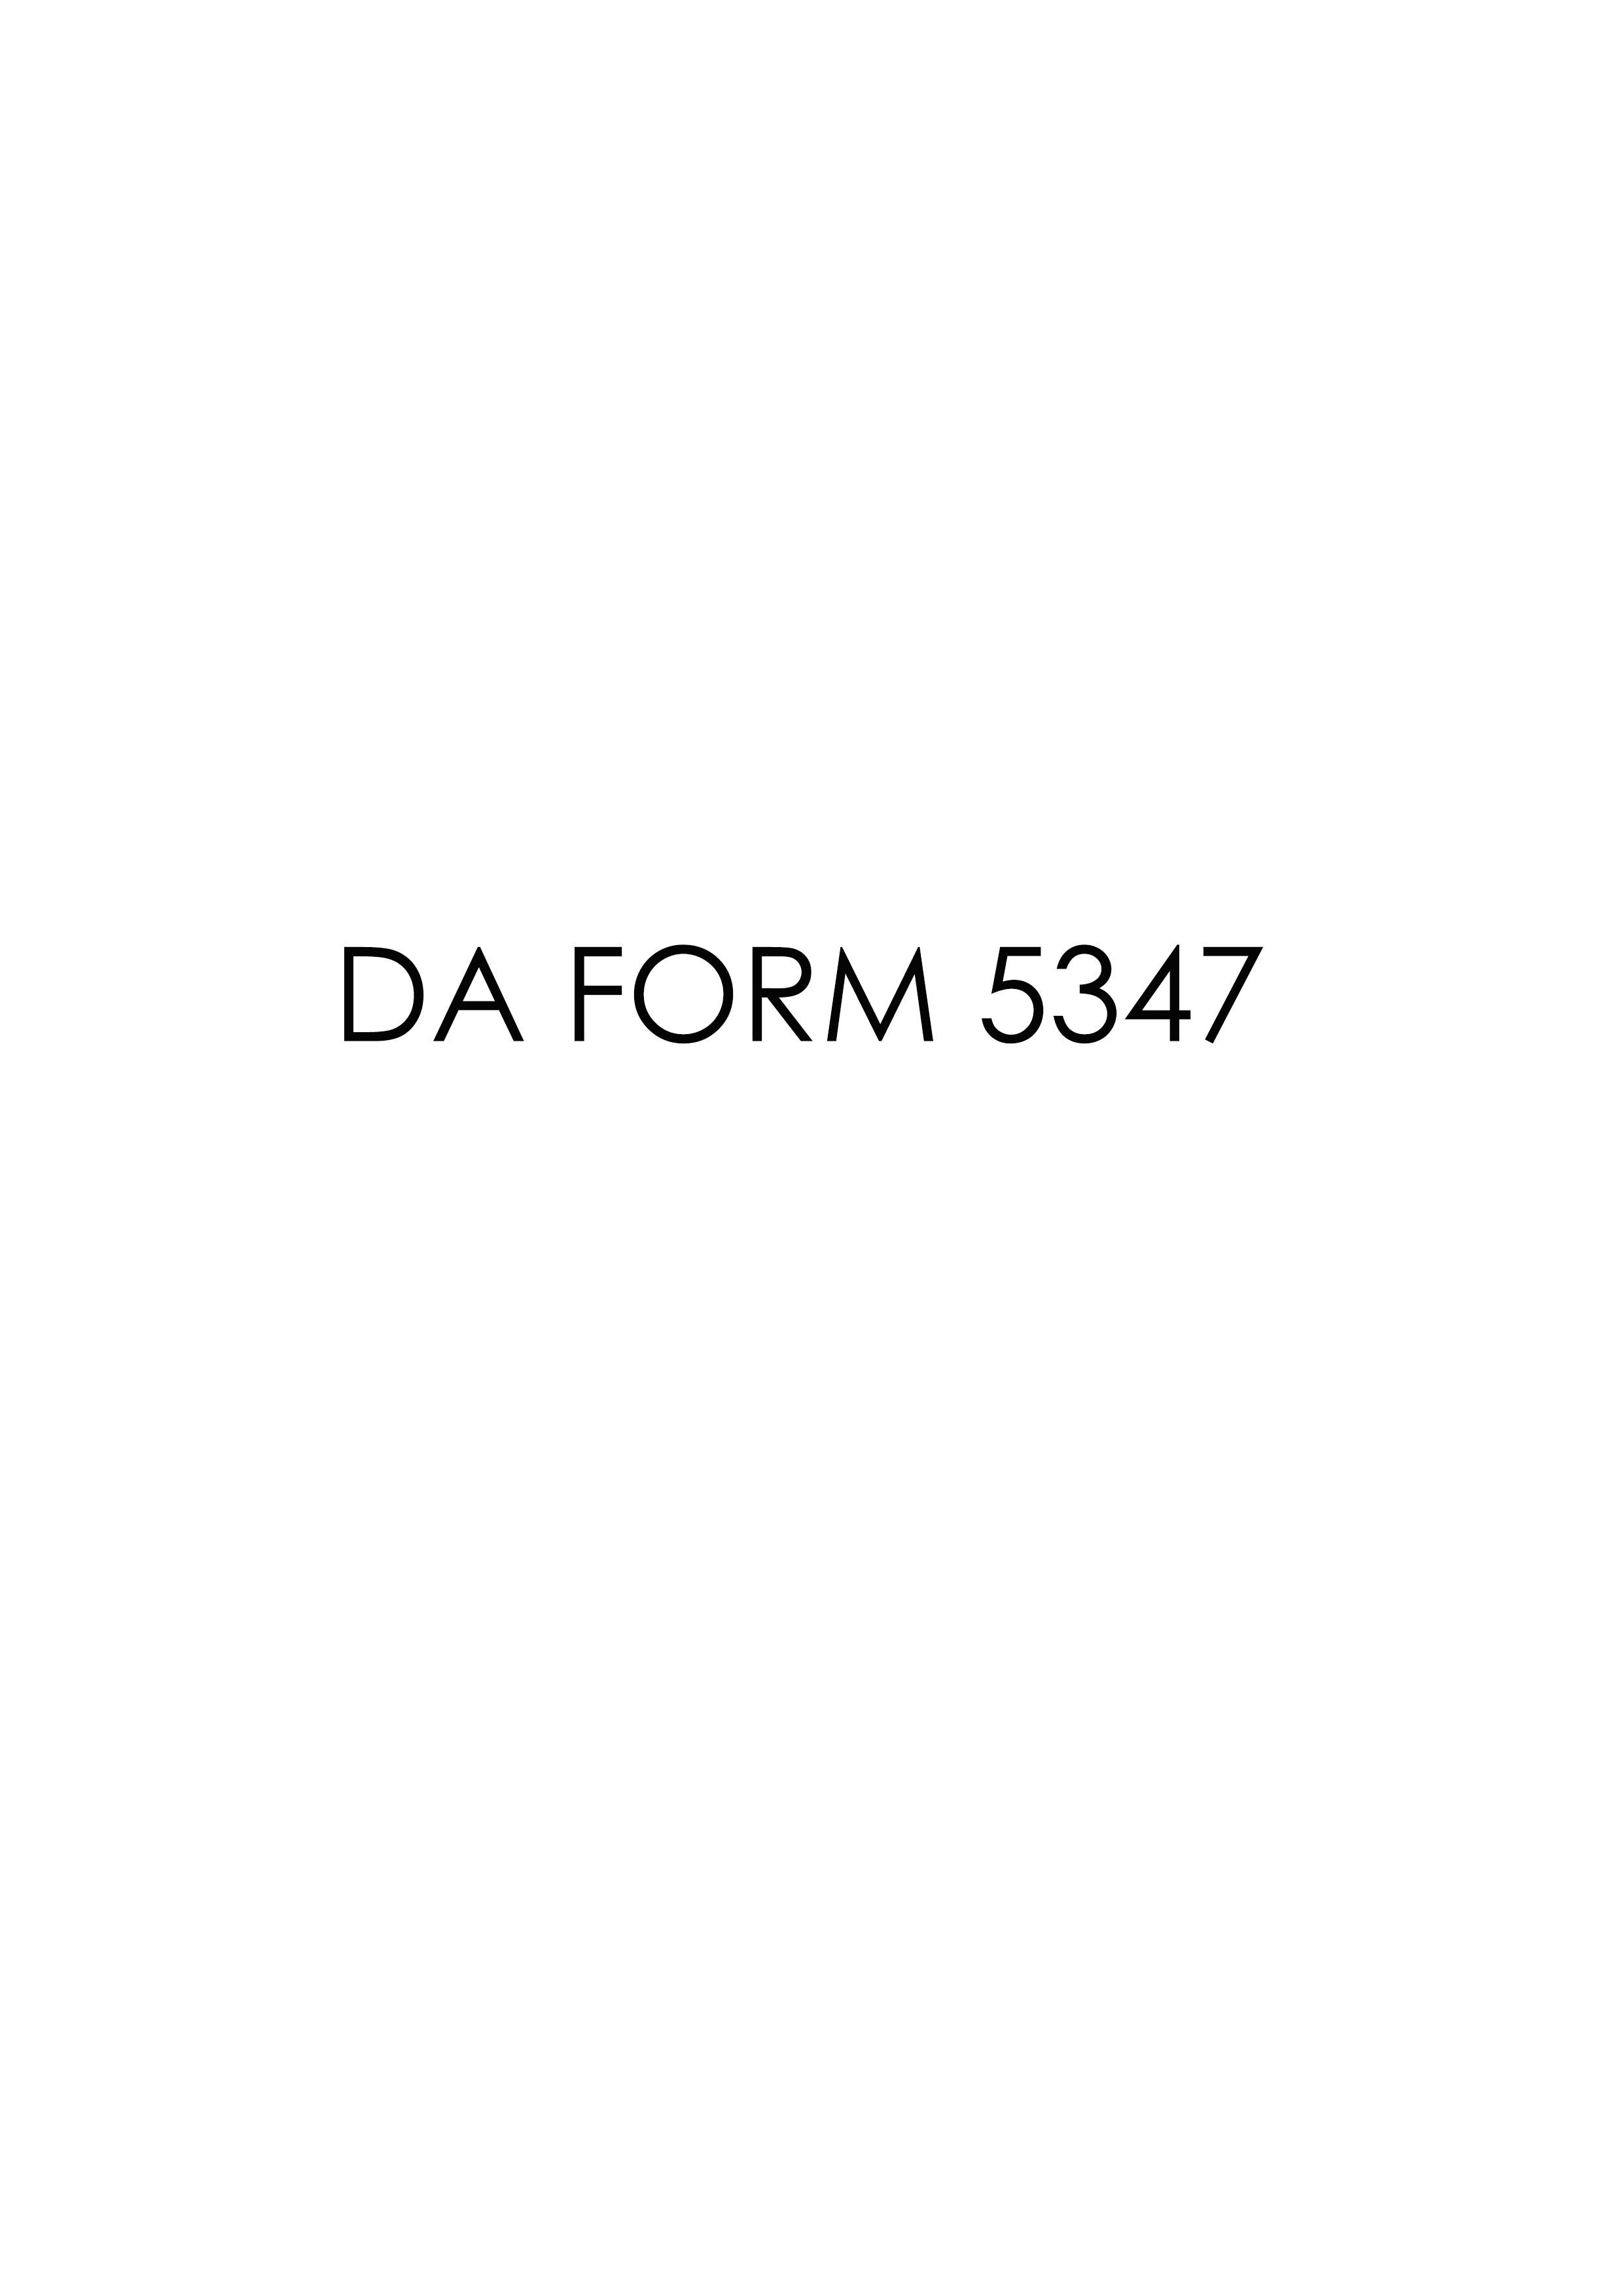 da Form 5347 fillable